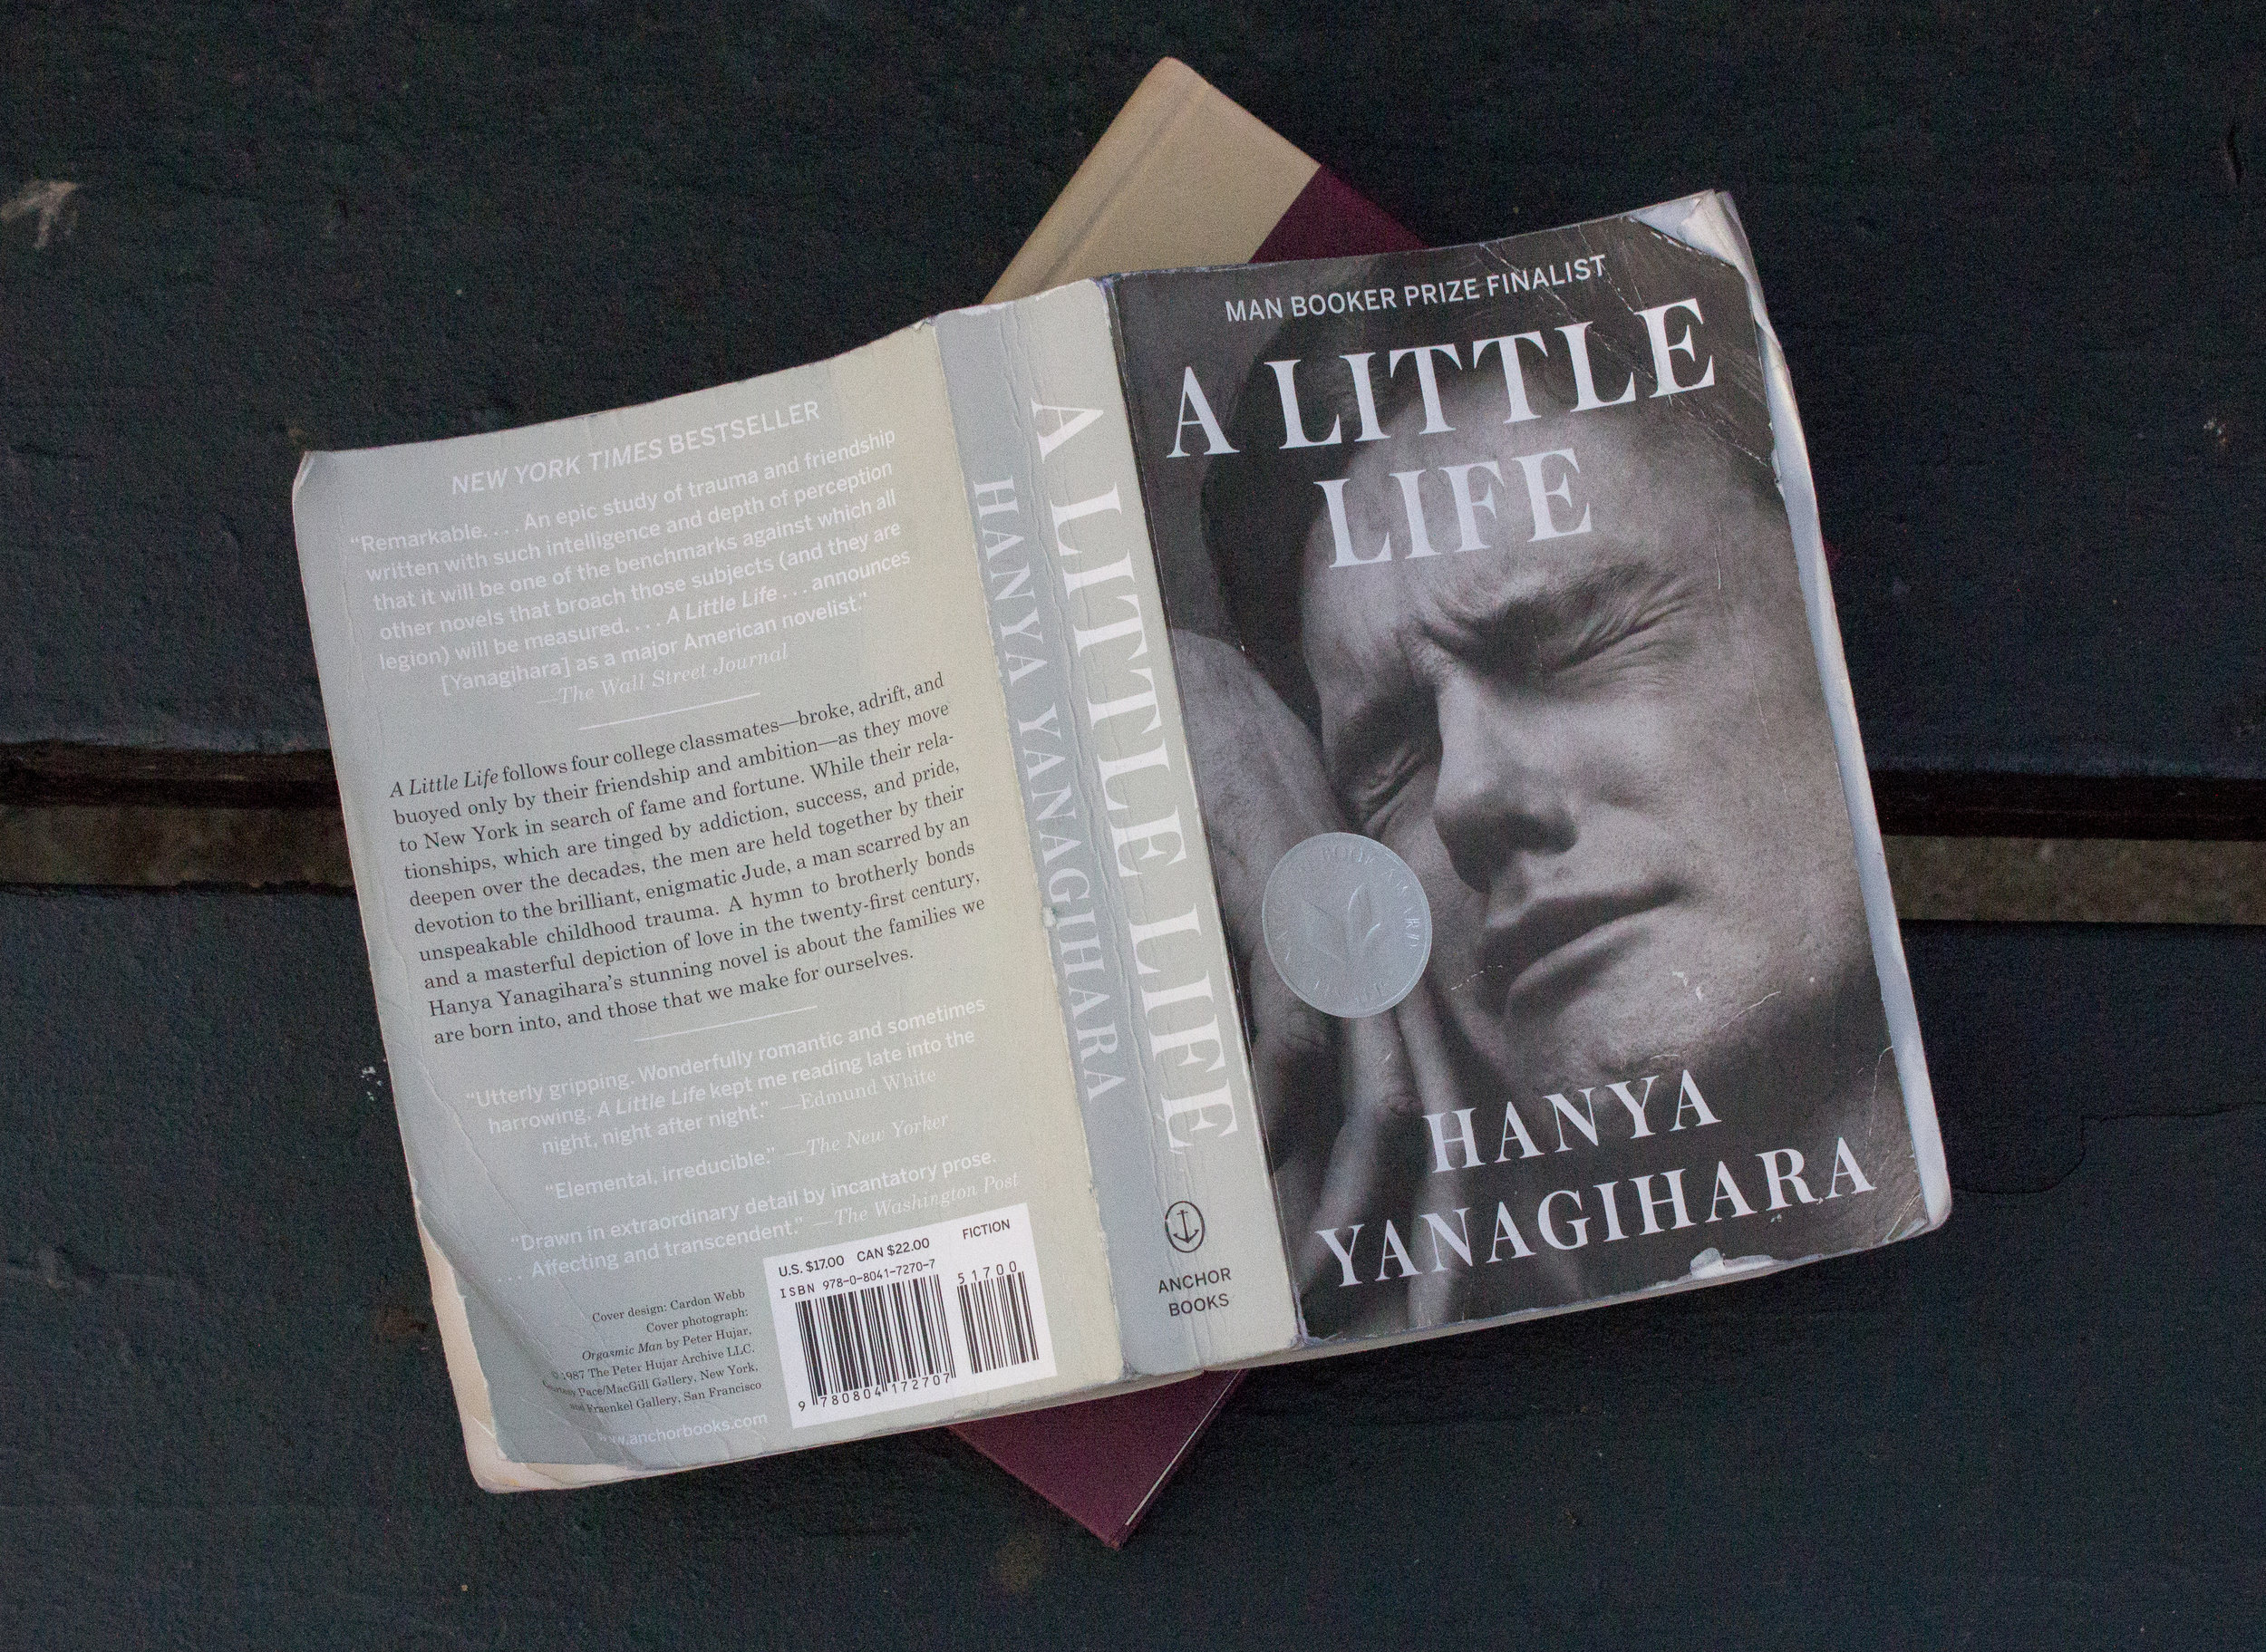 Little life book. A little Life книга. A little Life hanya Yanagihara. Янагихара книги. Обложка книги a little Life.